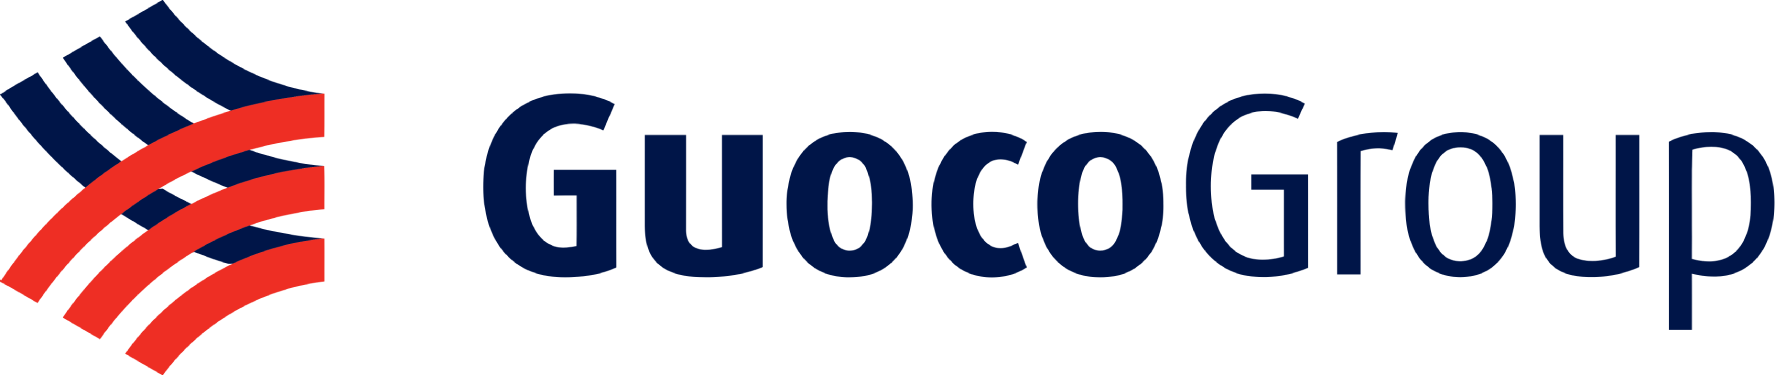 Guoco logo large (transparent PNG)